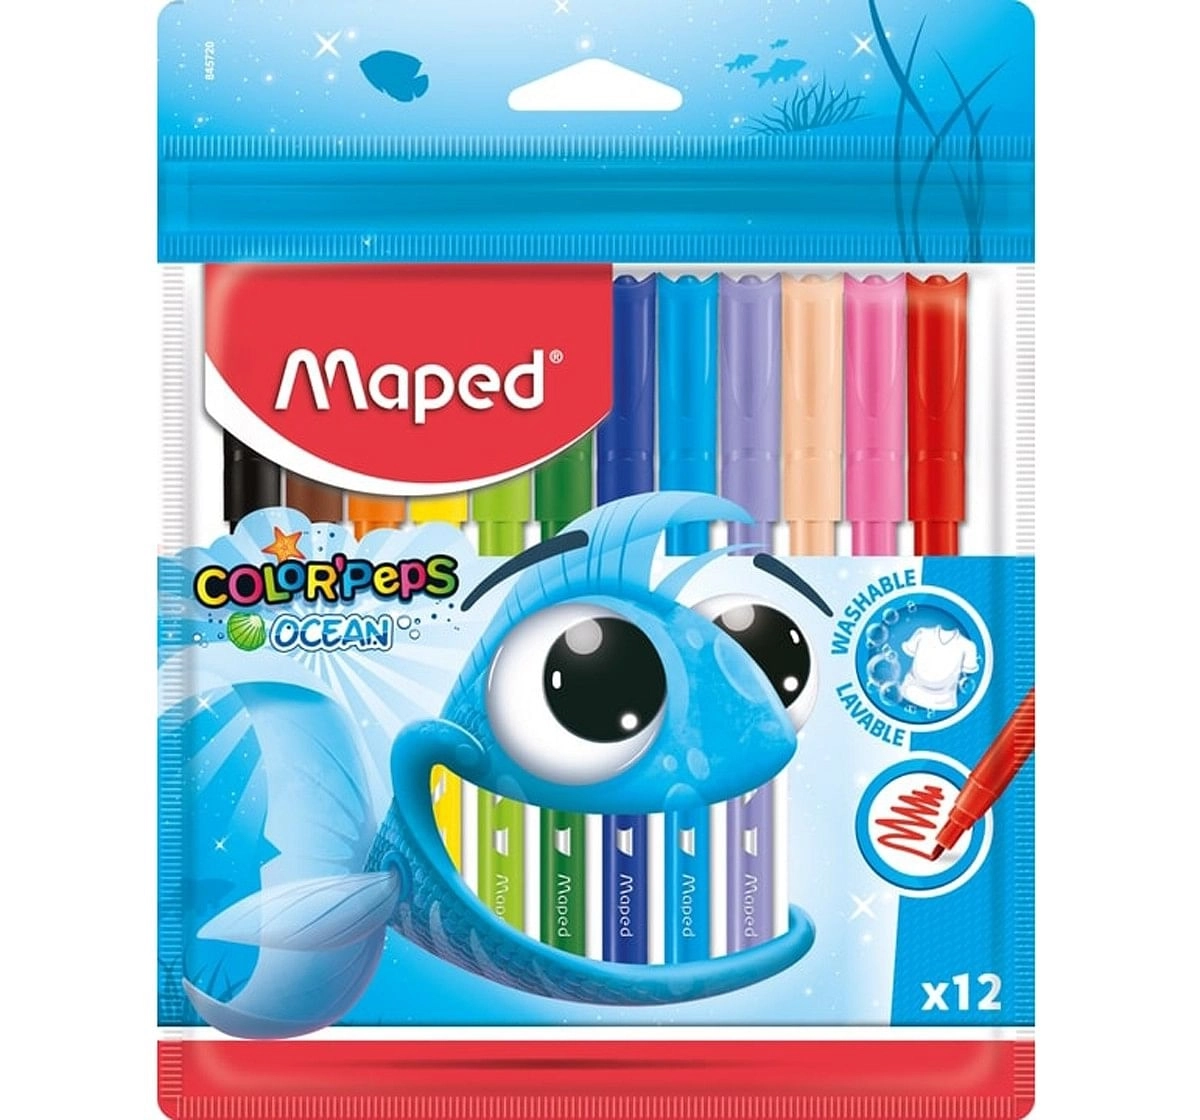 Maped Color'Peps Felt Tip Pens Ocean Pulse 12 Shades Set Multicolour 7Y+